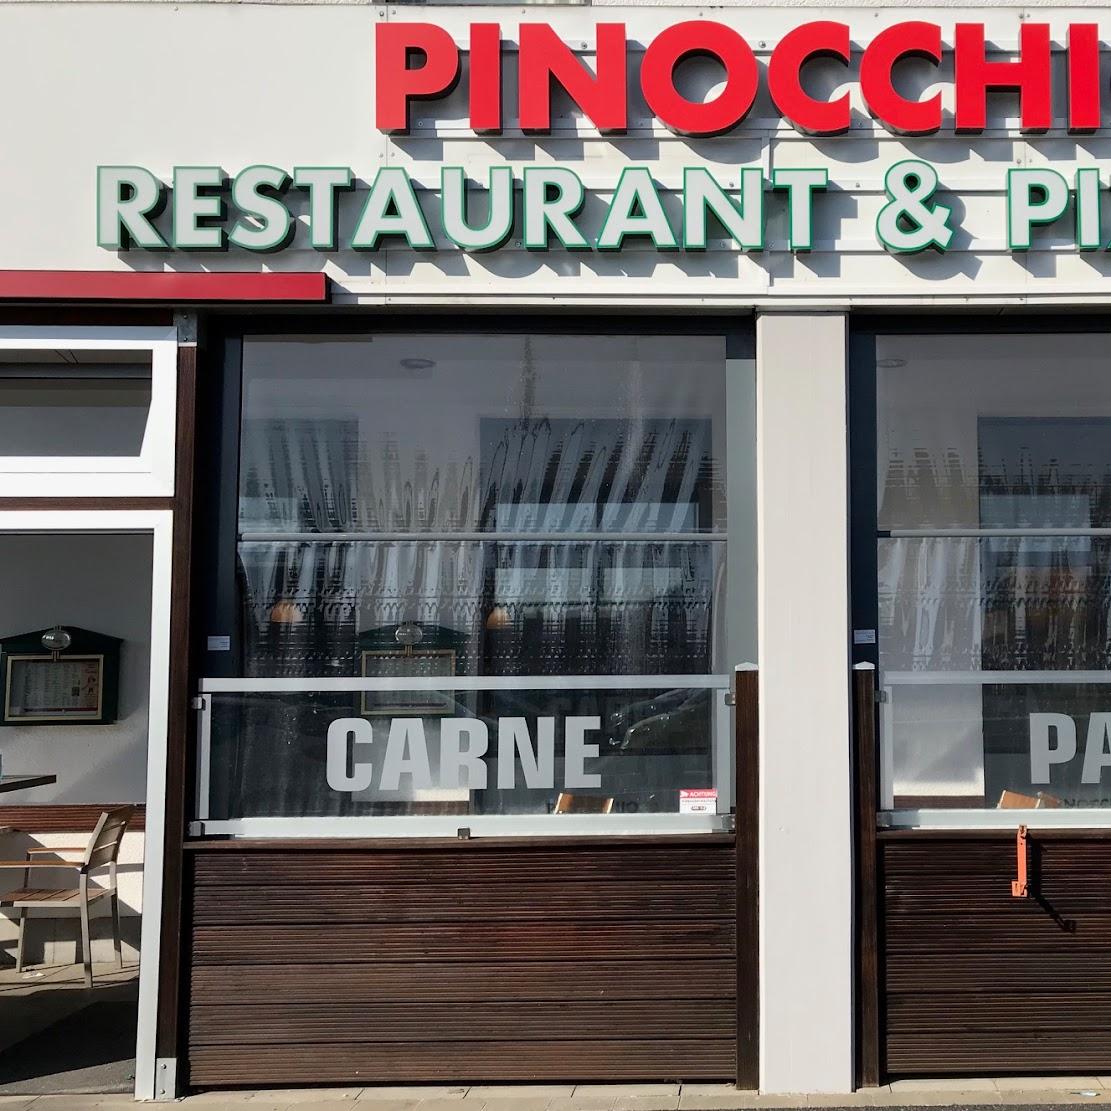 Restaurant "Restaurant & Pizzeria Pinocchio" in Stolberg